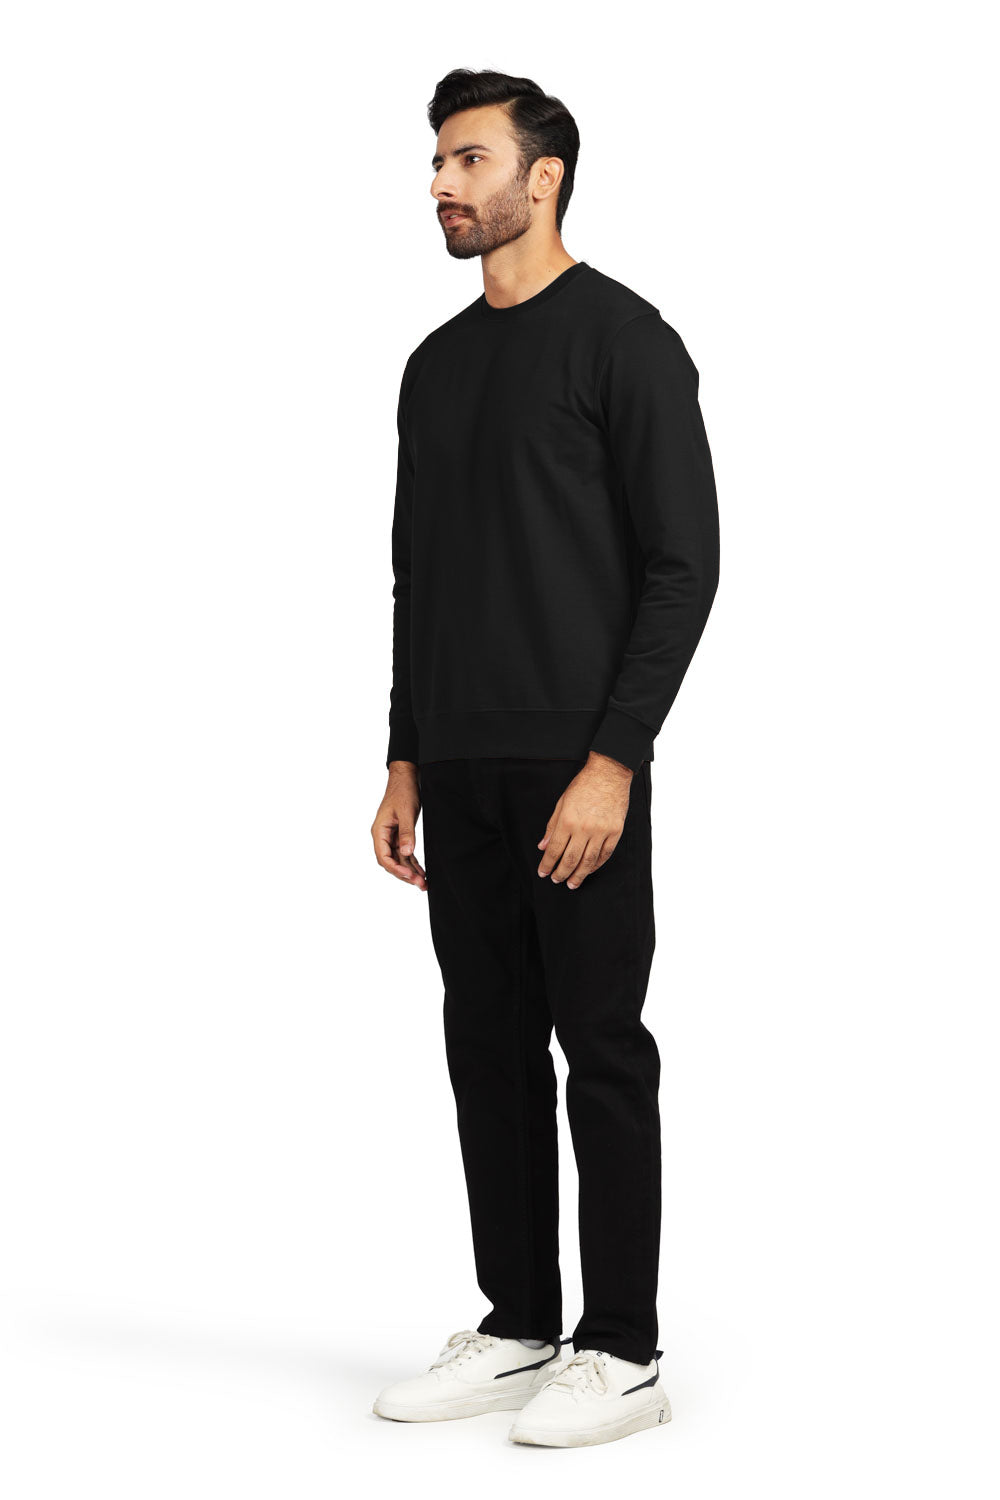 Black Sweatshirt – RoyalTag